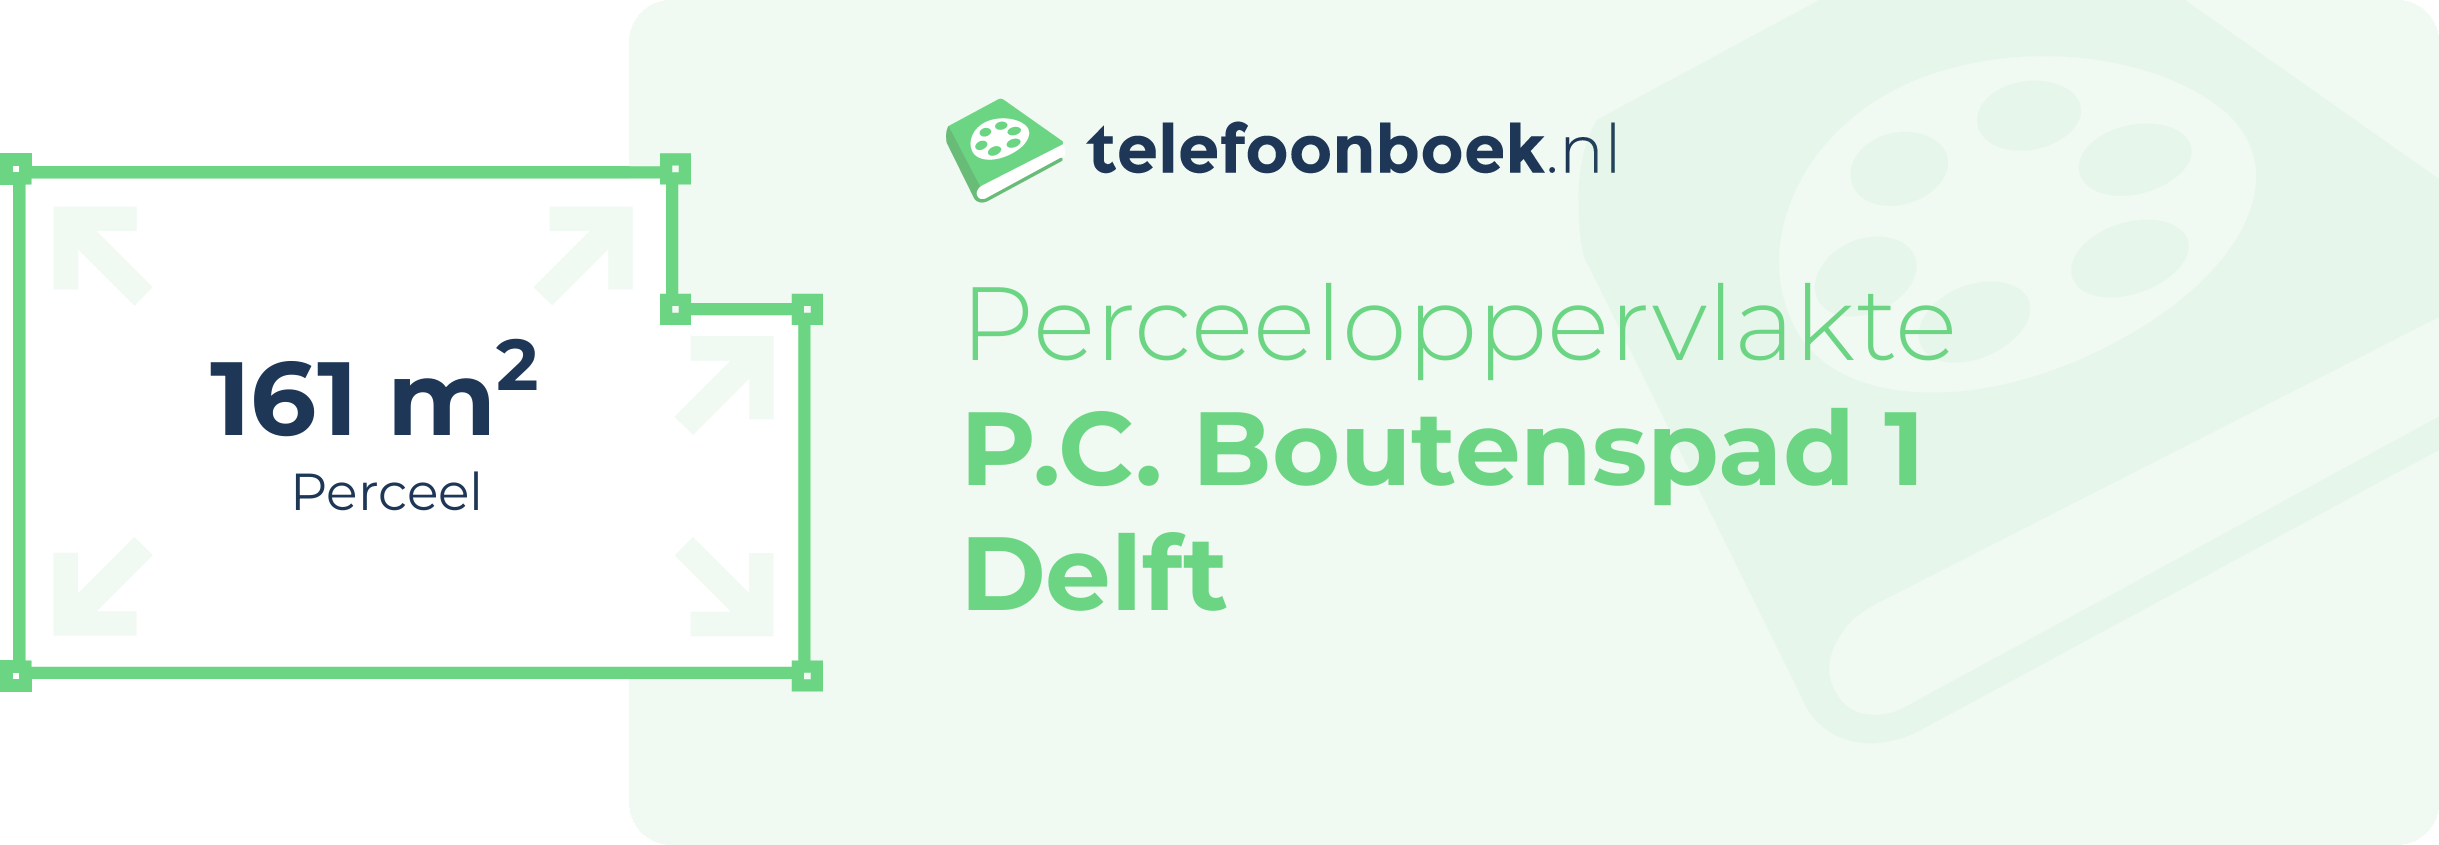 Perceeloppervlakte P.C. Boutenspad 1 Delft